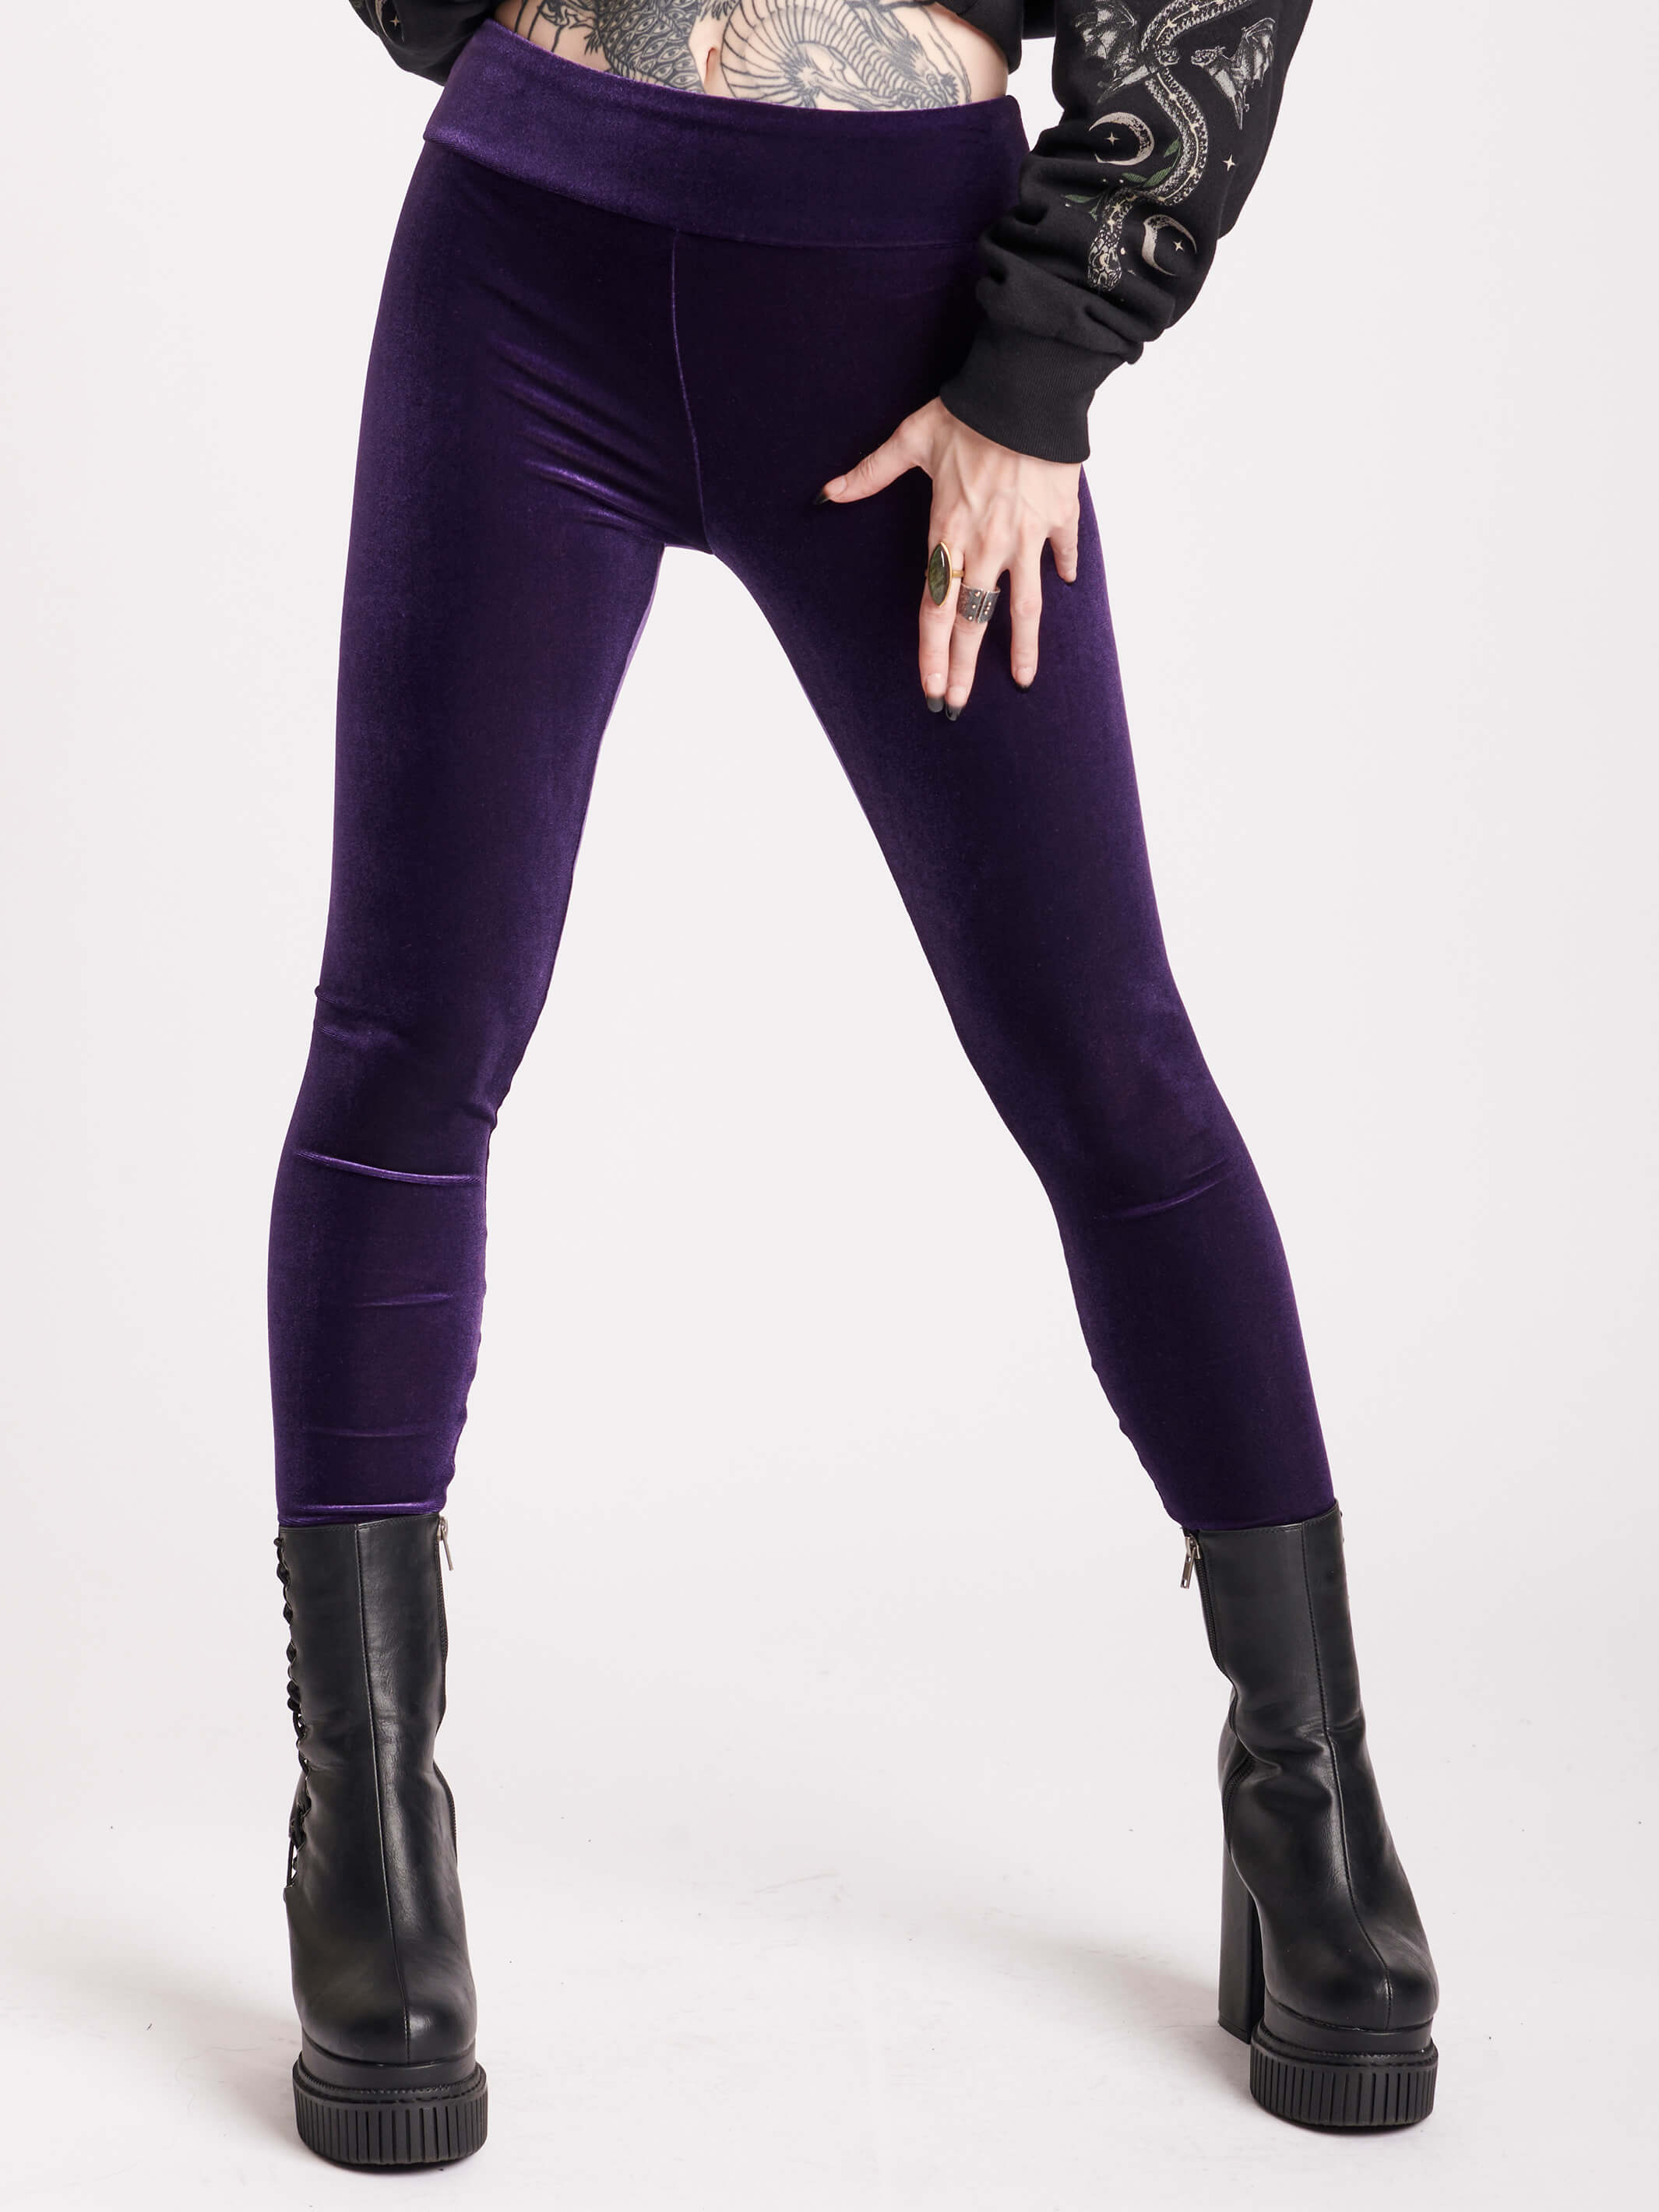 Buy Purple Leggings for Women by VELOZ Online